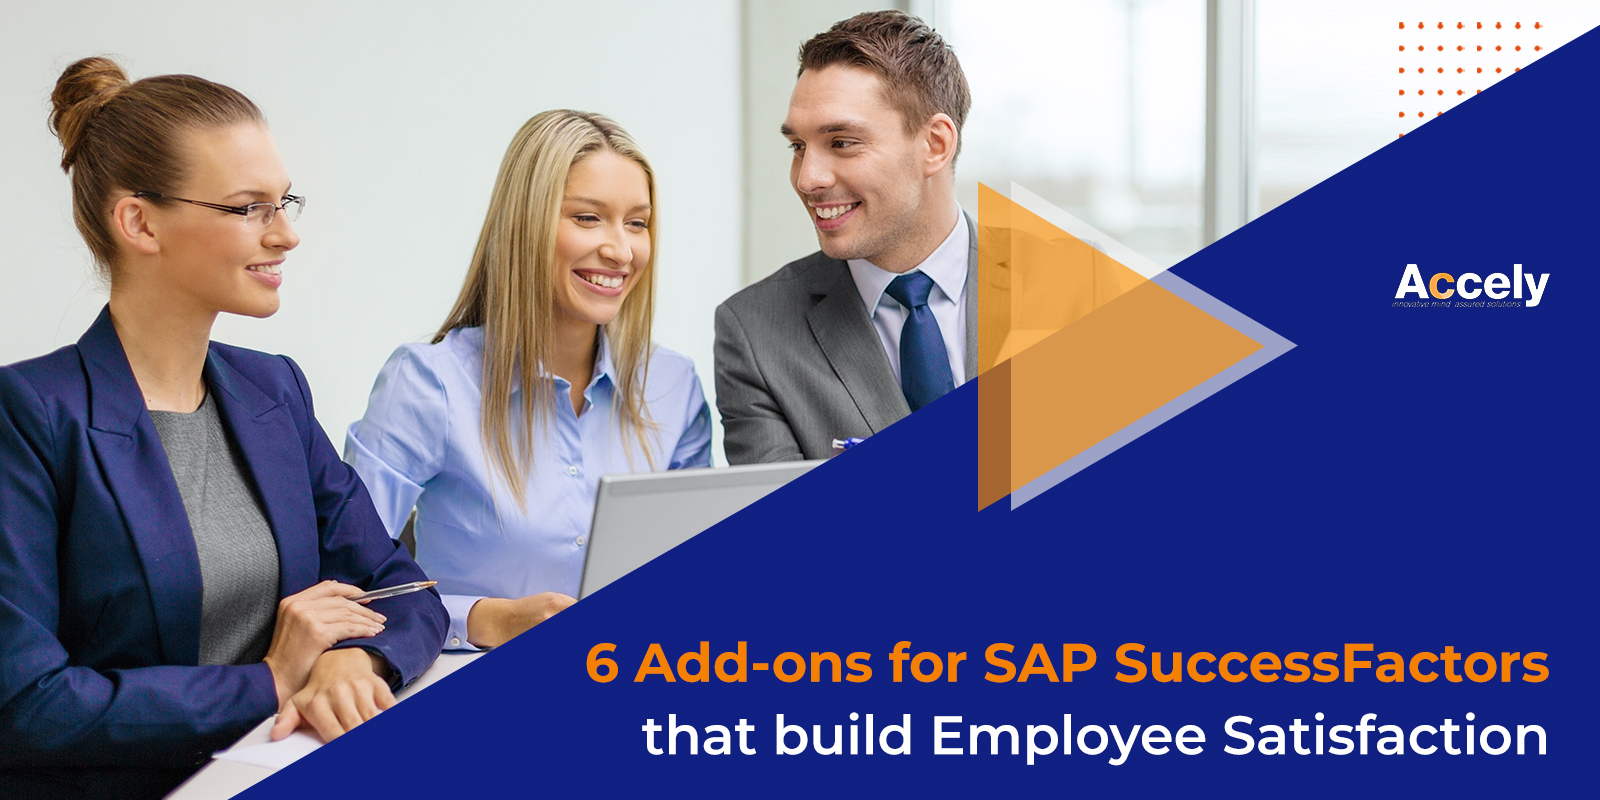 6 Add-ons for SAP SuccessFactors that build Employee Satisfaction